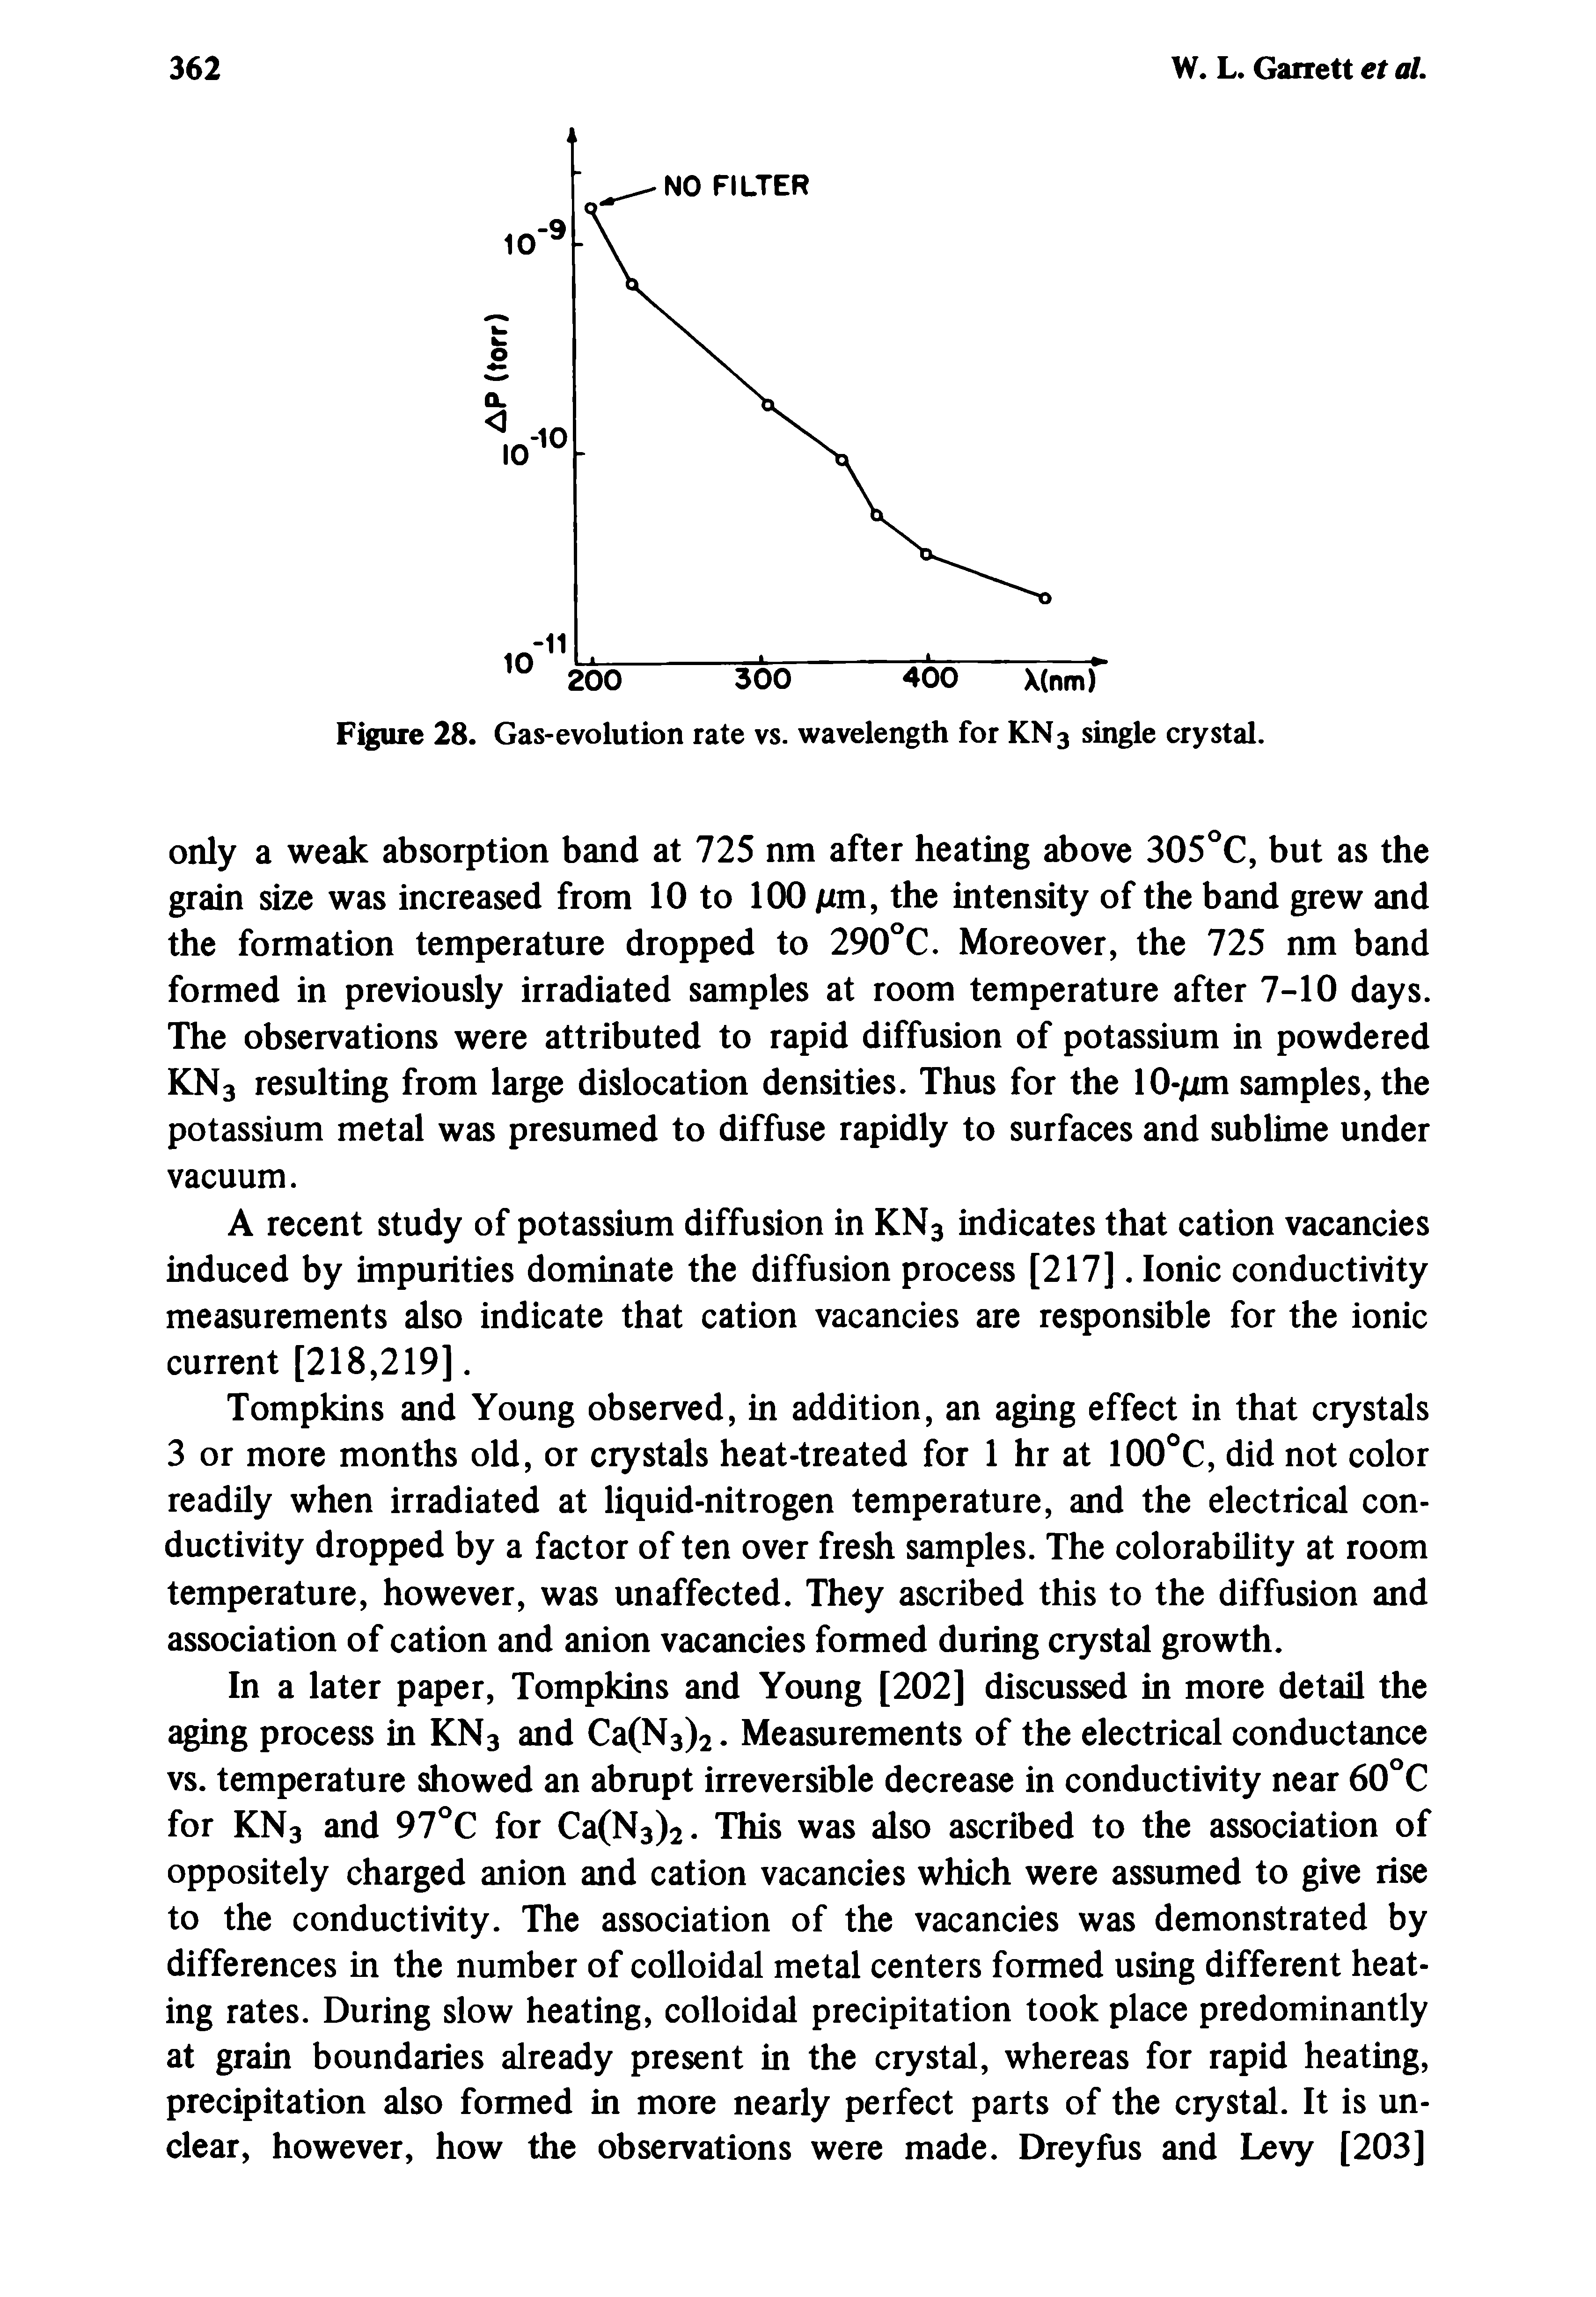 Figure 28. Gas-evolution rate vs. wavelength for KN3 single crystal.